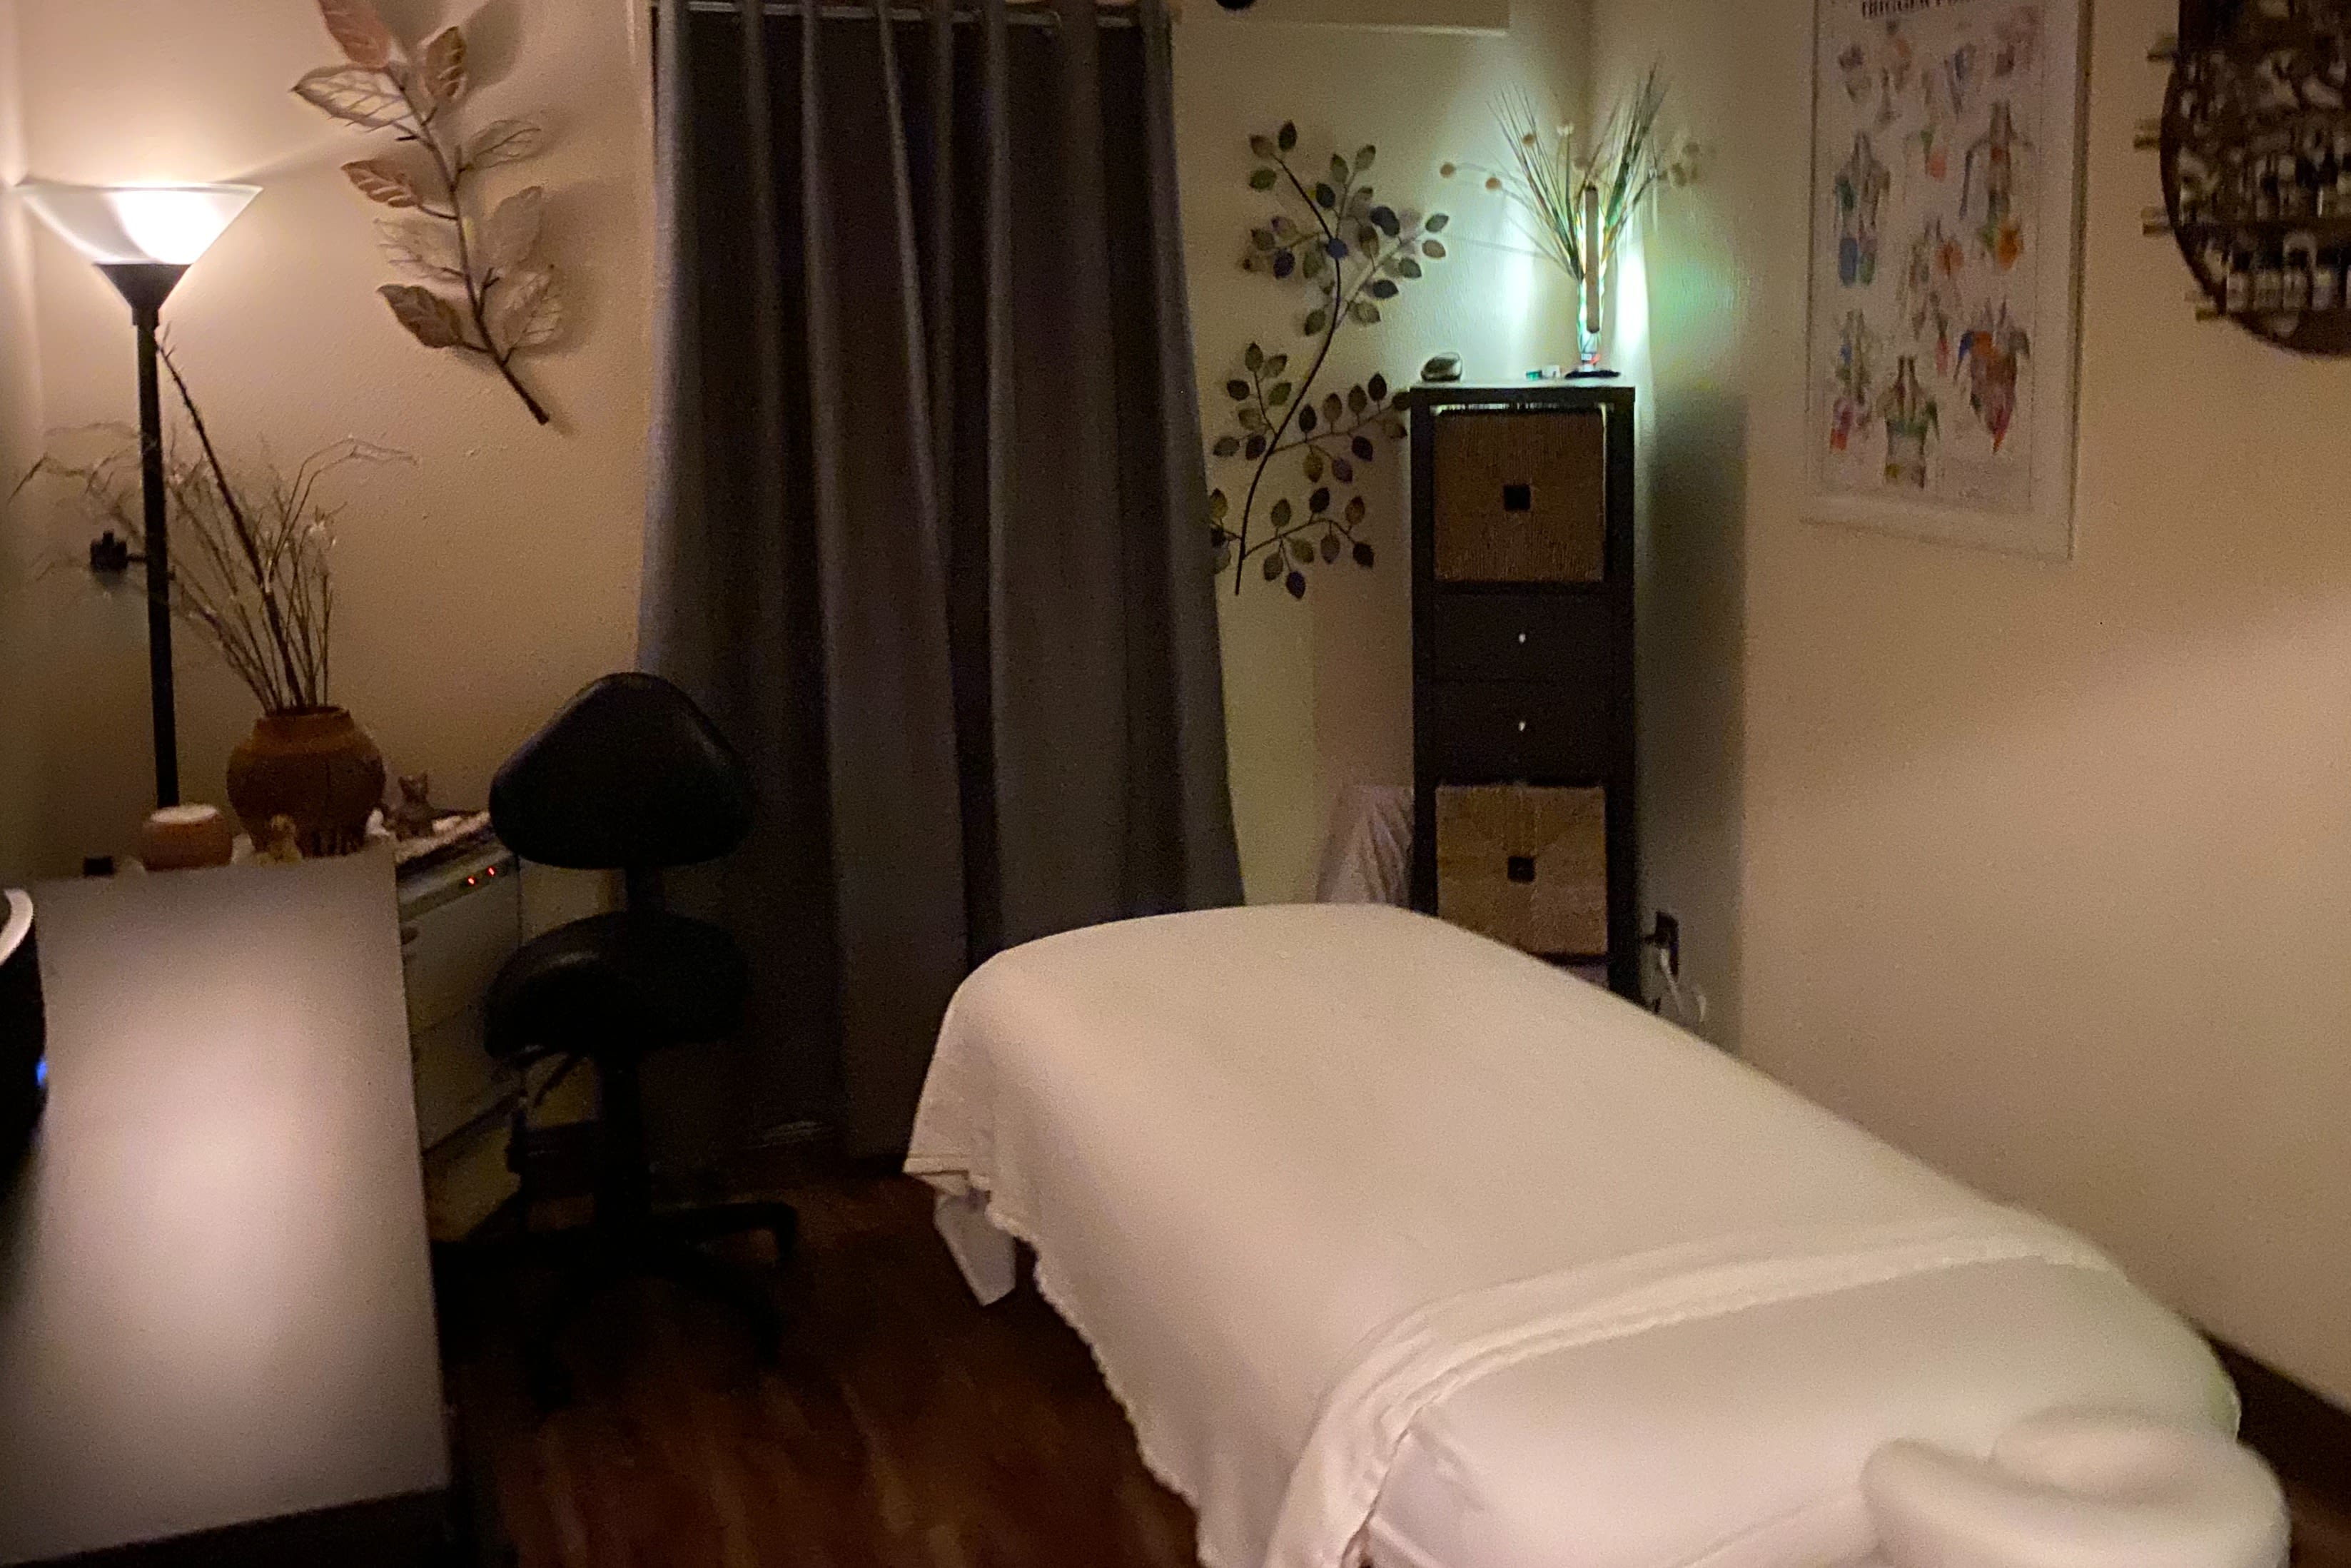 massage therapy room decor